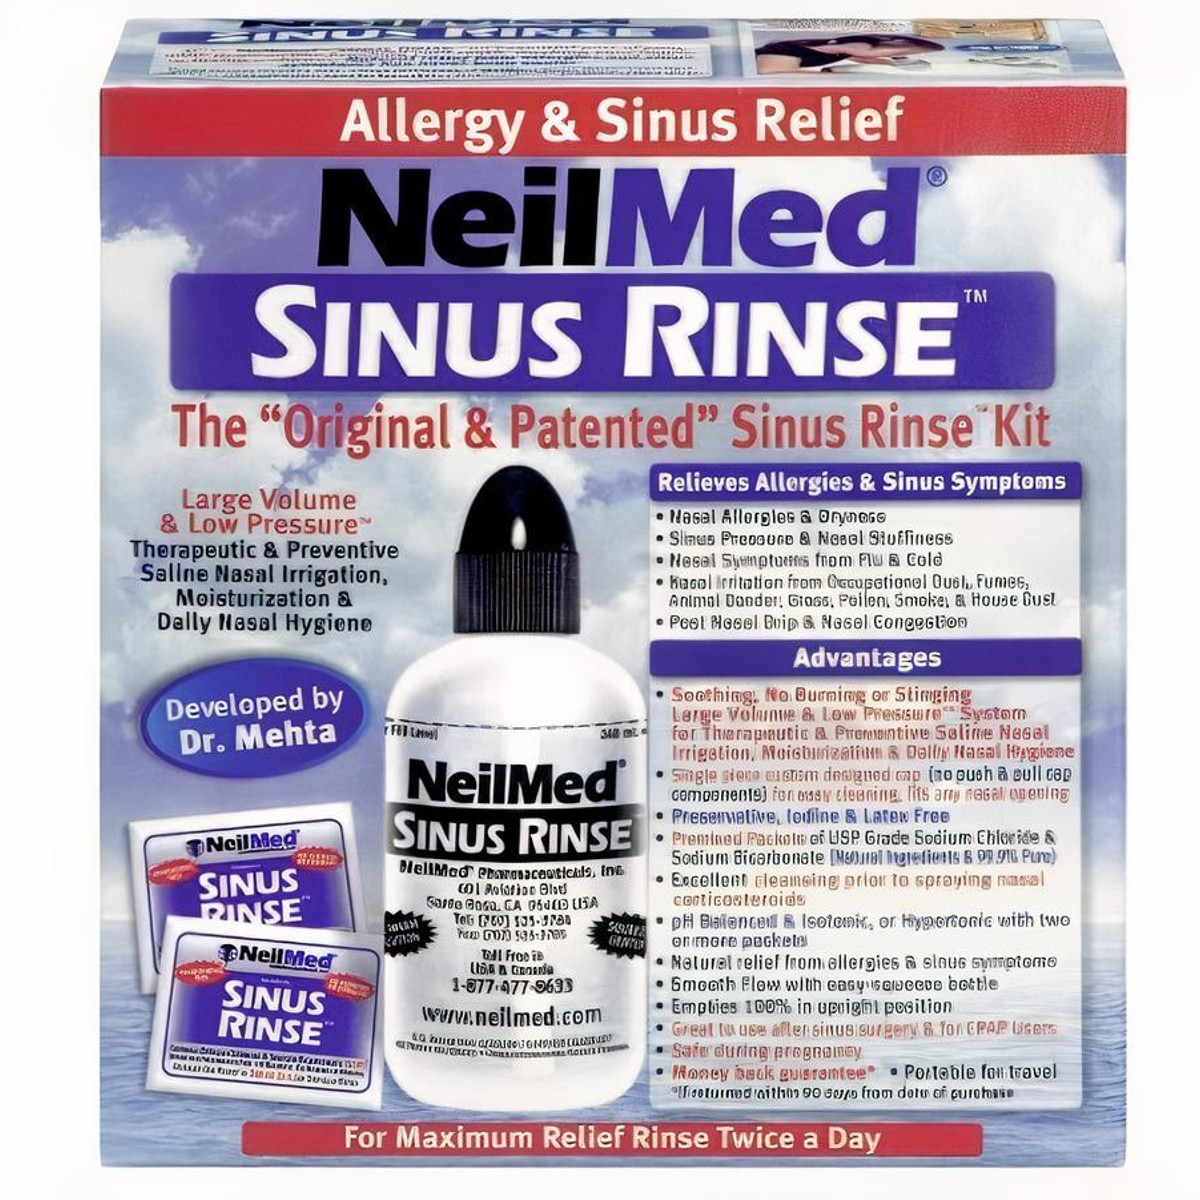 NeilMed Extra Strength Sinus Rinse, 70 ct - Harris Teeter